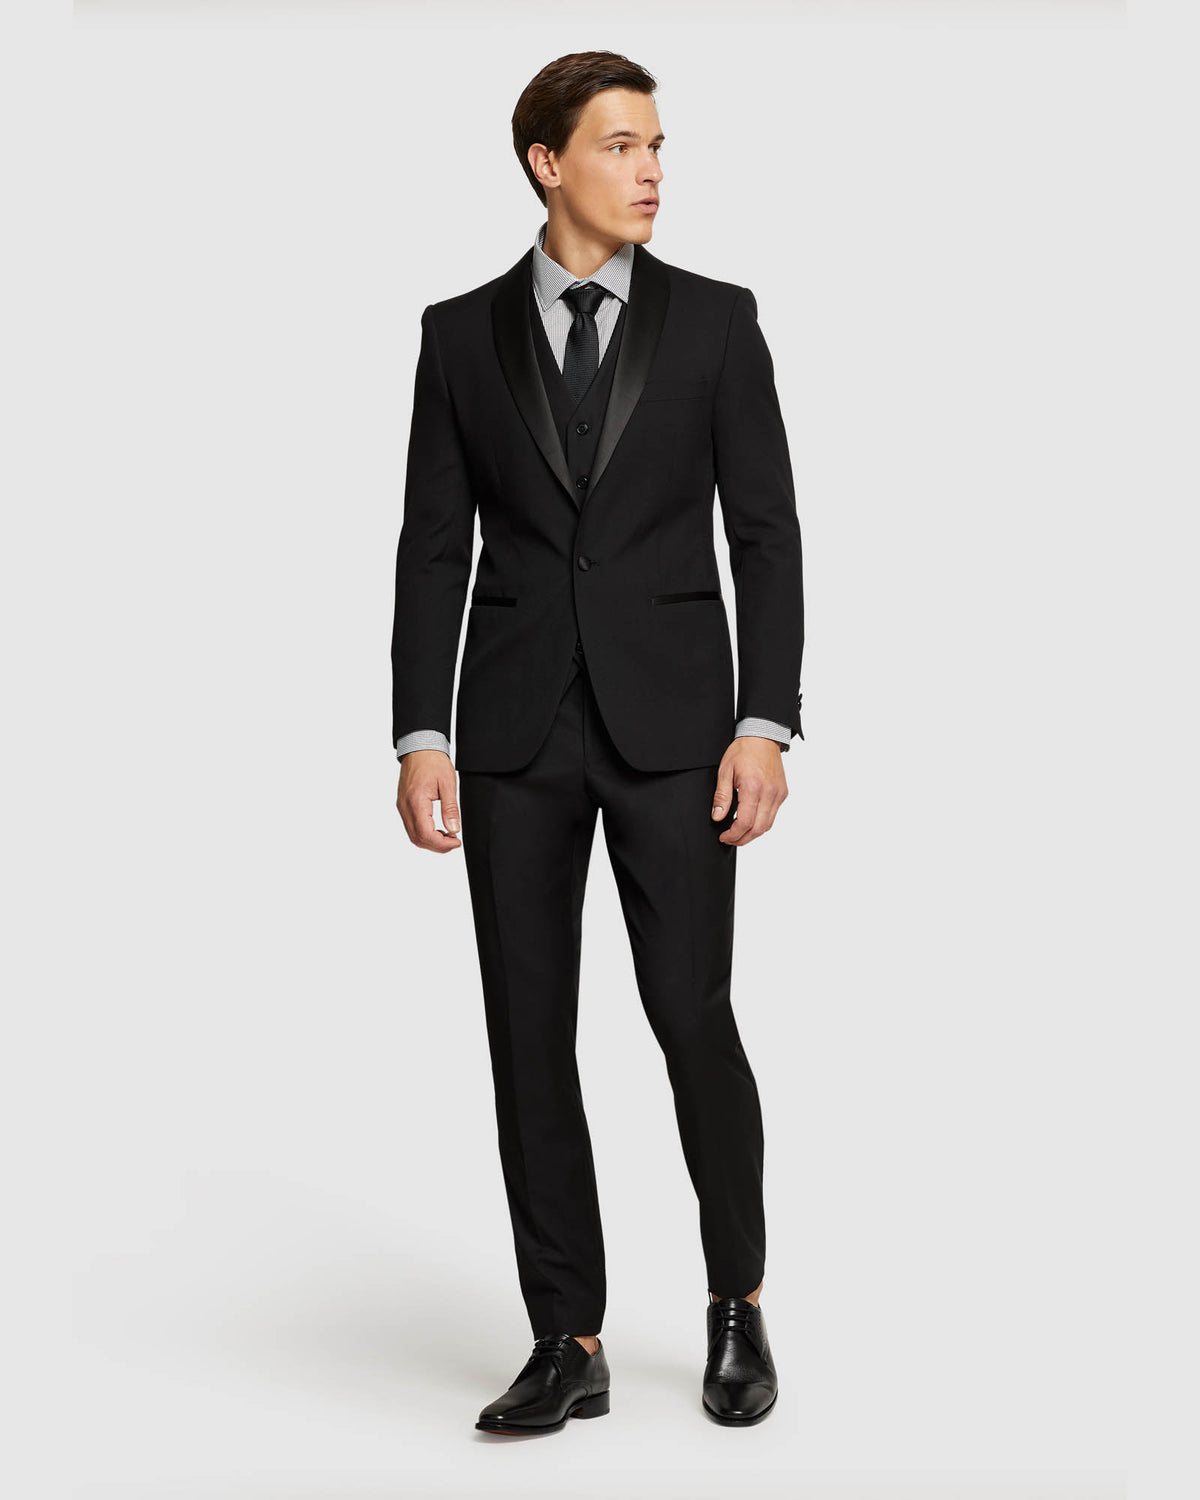 Mens Black Flat Front ComfortWaist Tuxedo Pants with Satin Stripe   99tux